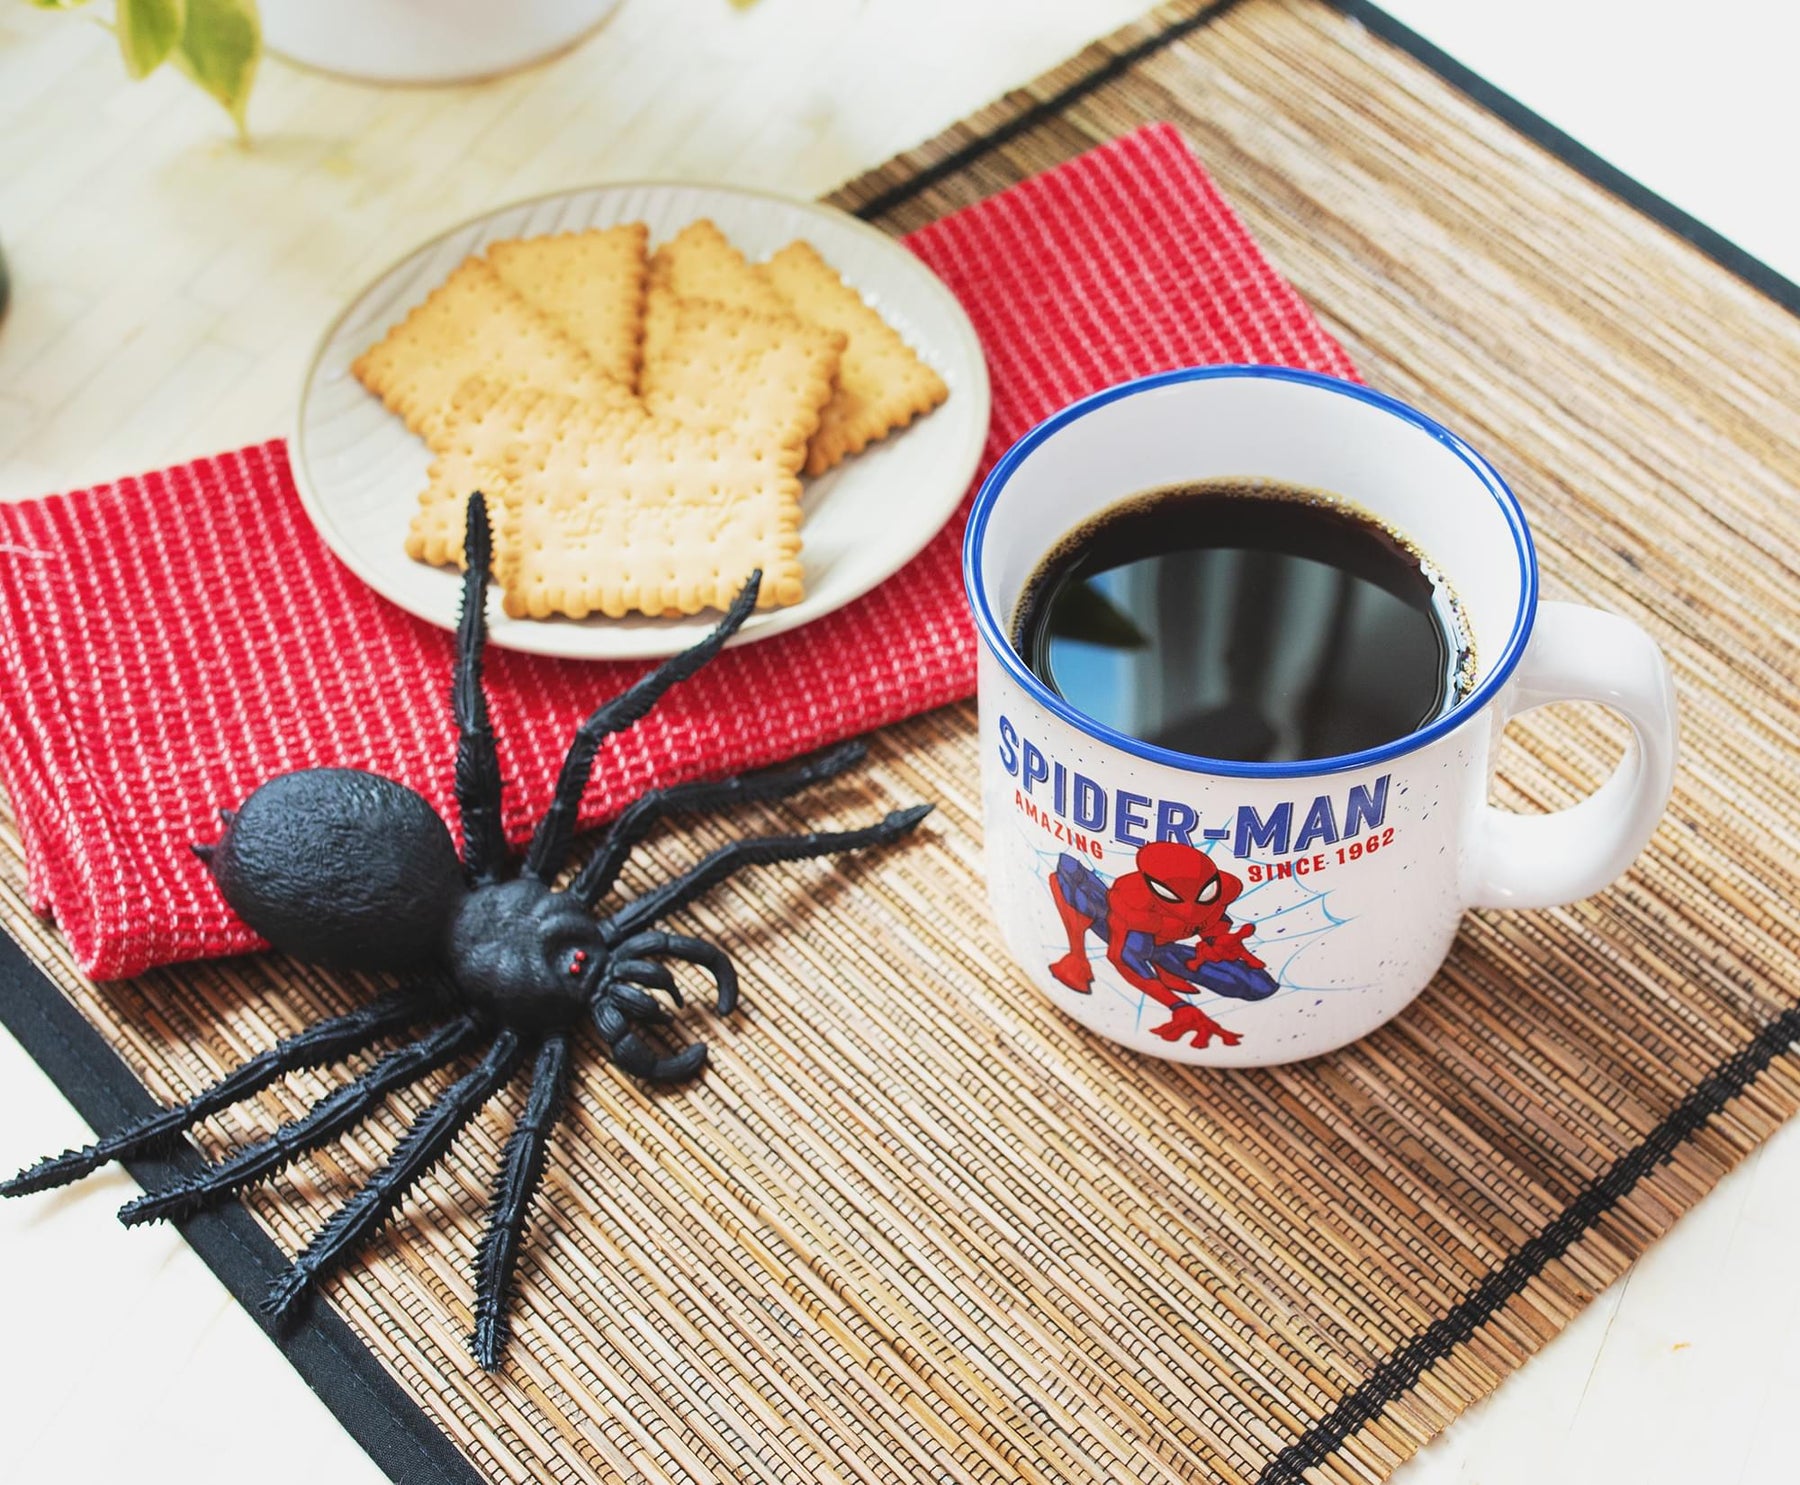 Marvel Spider-Man "Amazing Since 1962" Ceramic Camper Mug | Holds 20 Ounces